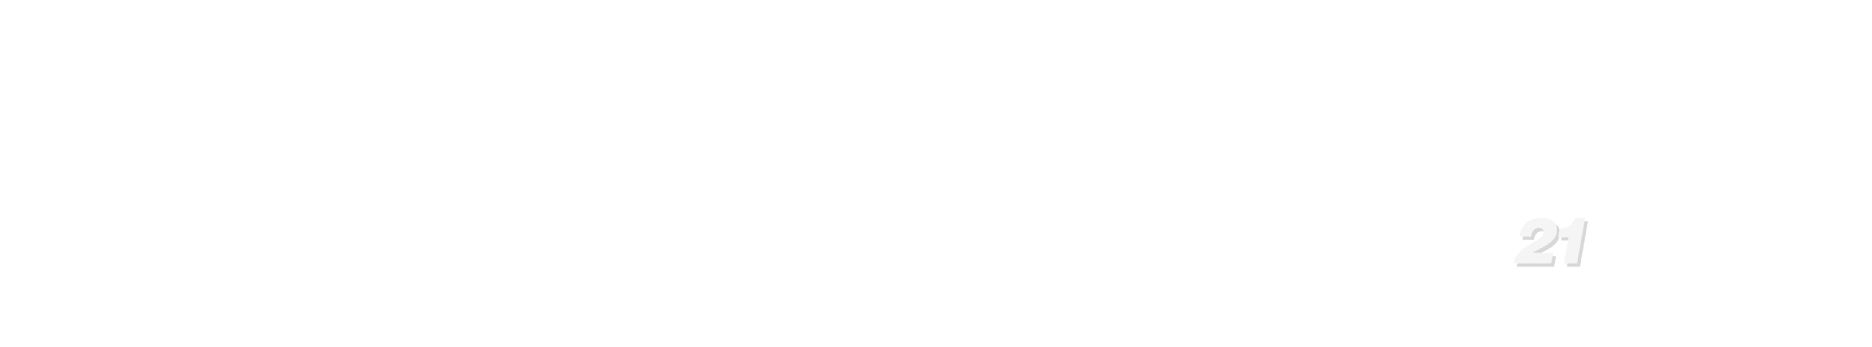 Epicor Prophet 21 logo